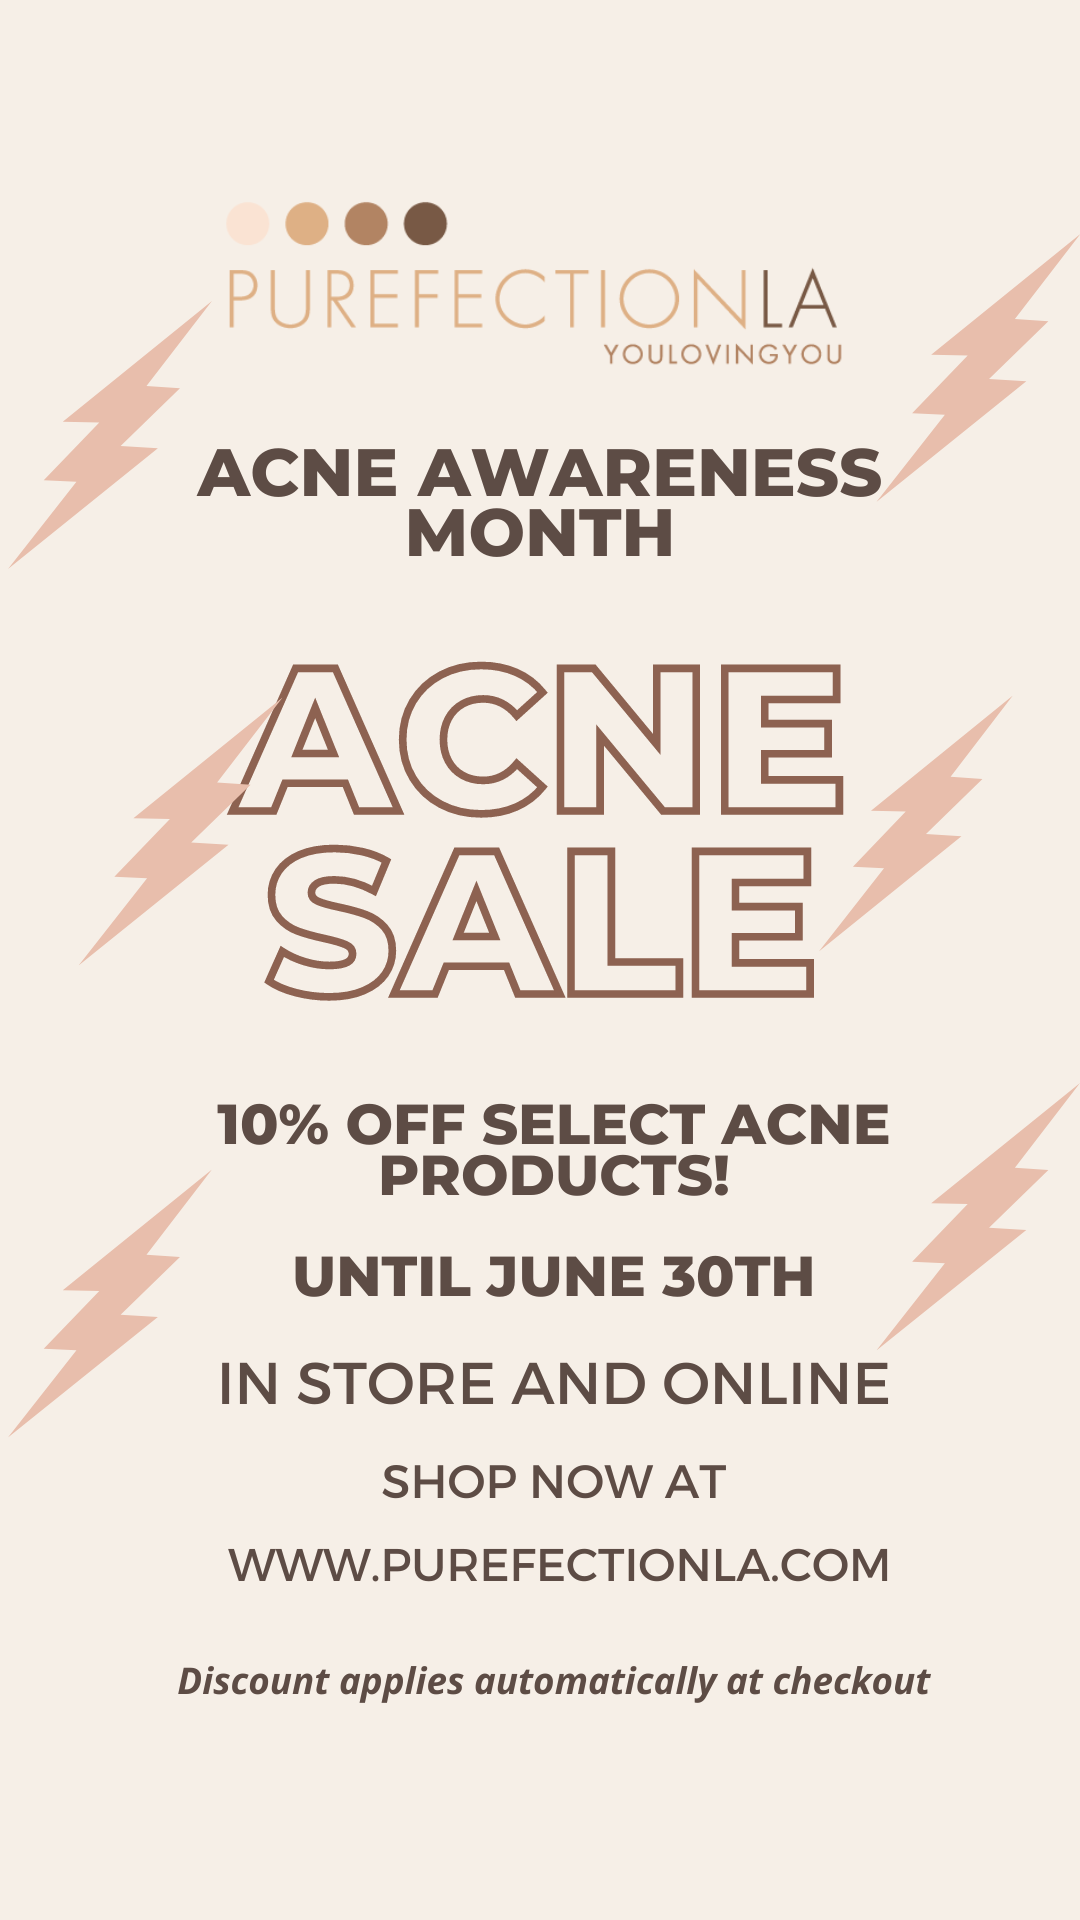 Acne Awarness month!